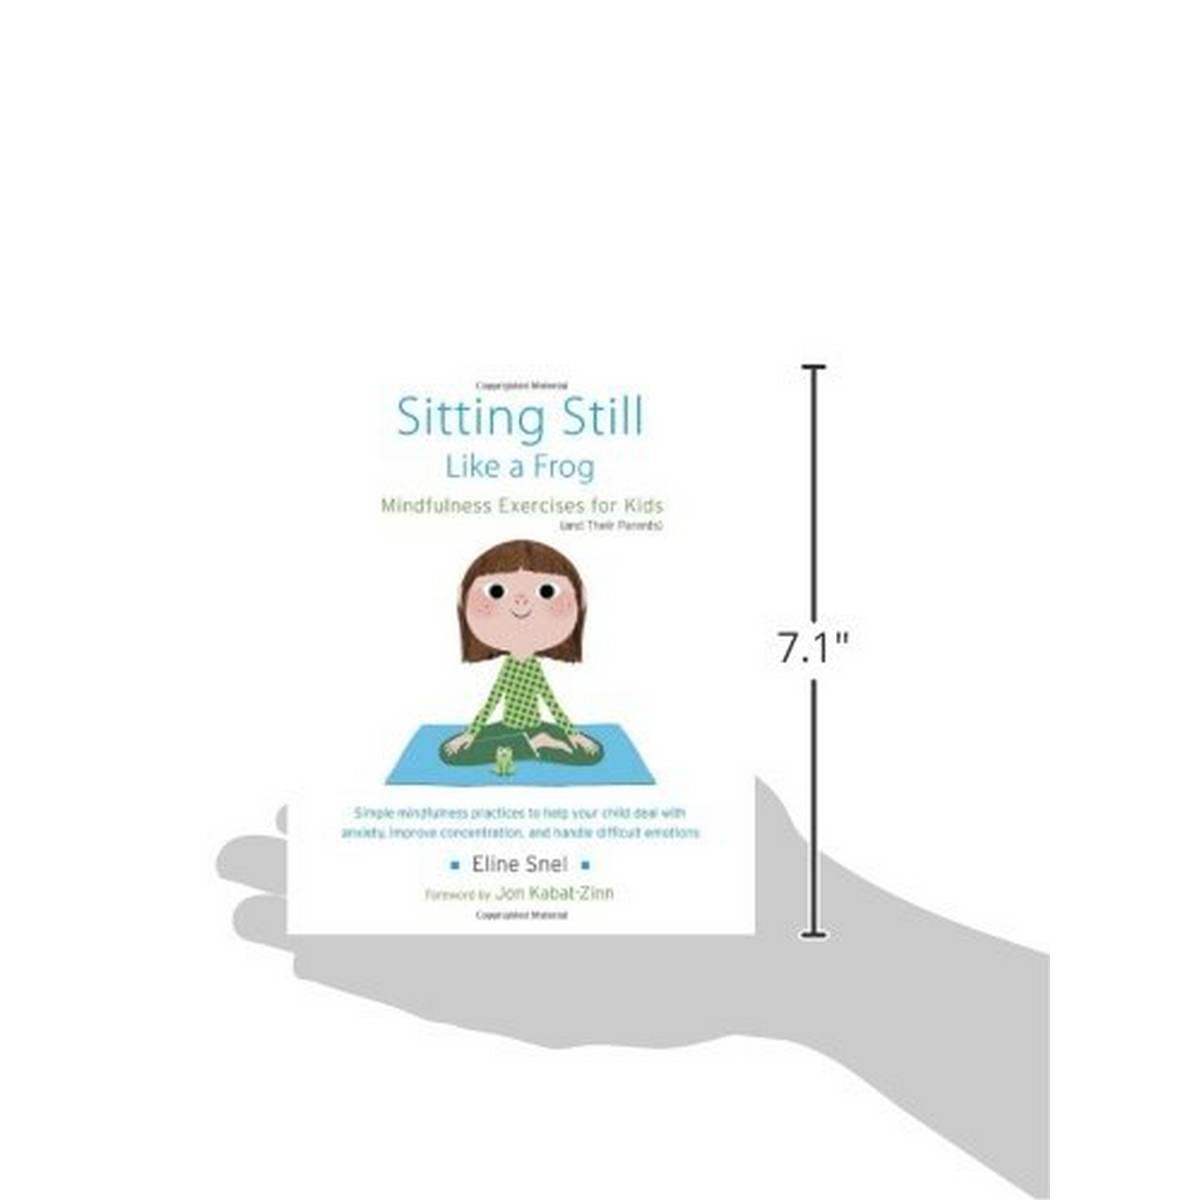 Sitting Still Like a Frog: Mindfulness Exercises for Kids